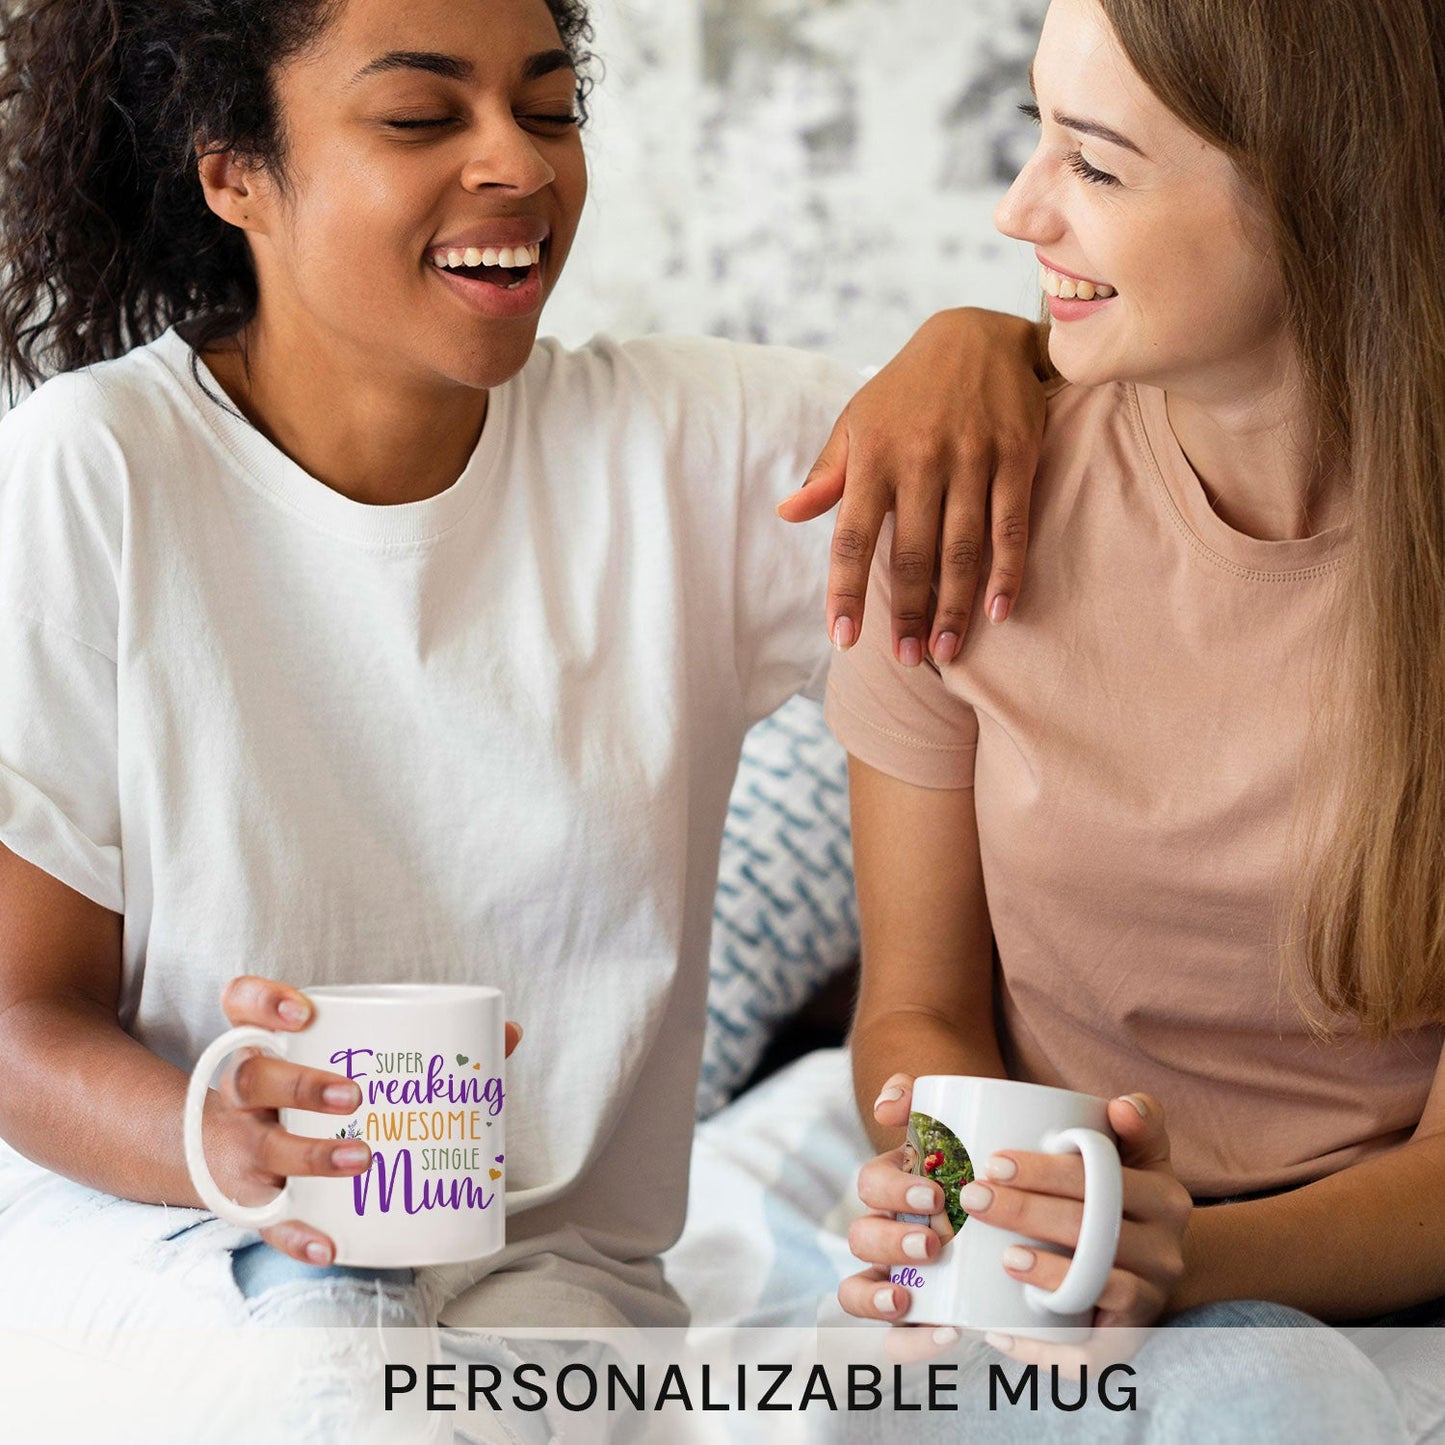 Super Freaking Awesome Single Mom - Personalized  gift For Single Mom - Custom Mug - MyMindfulGifts